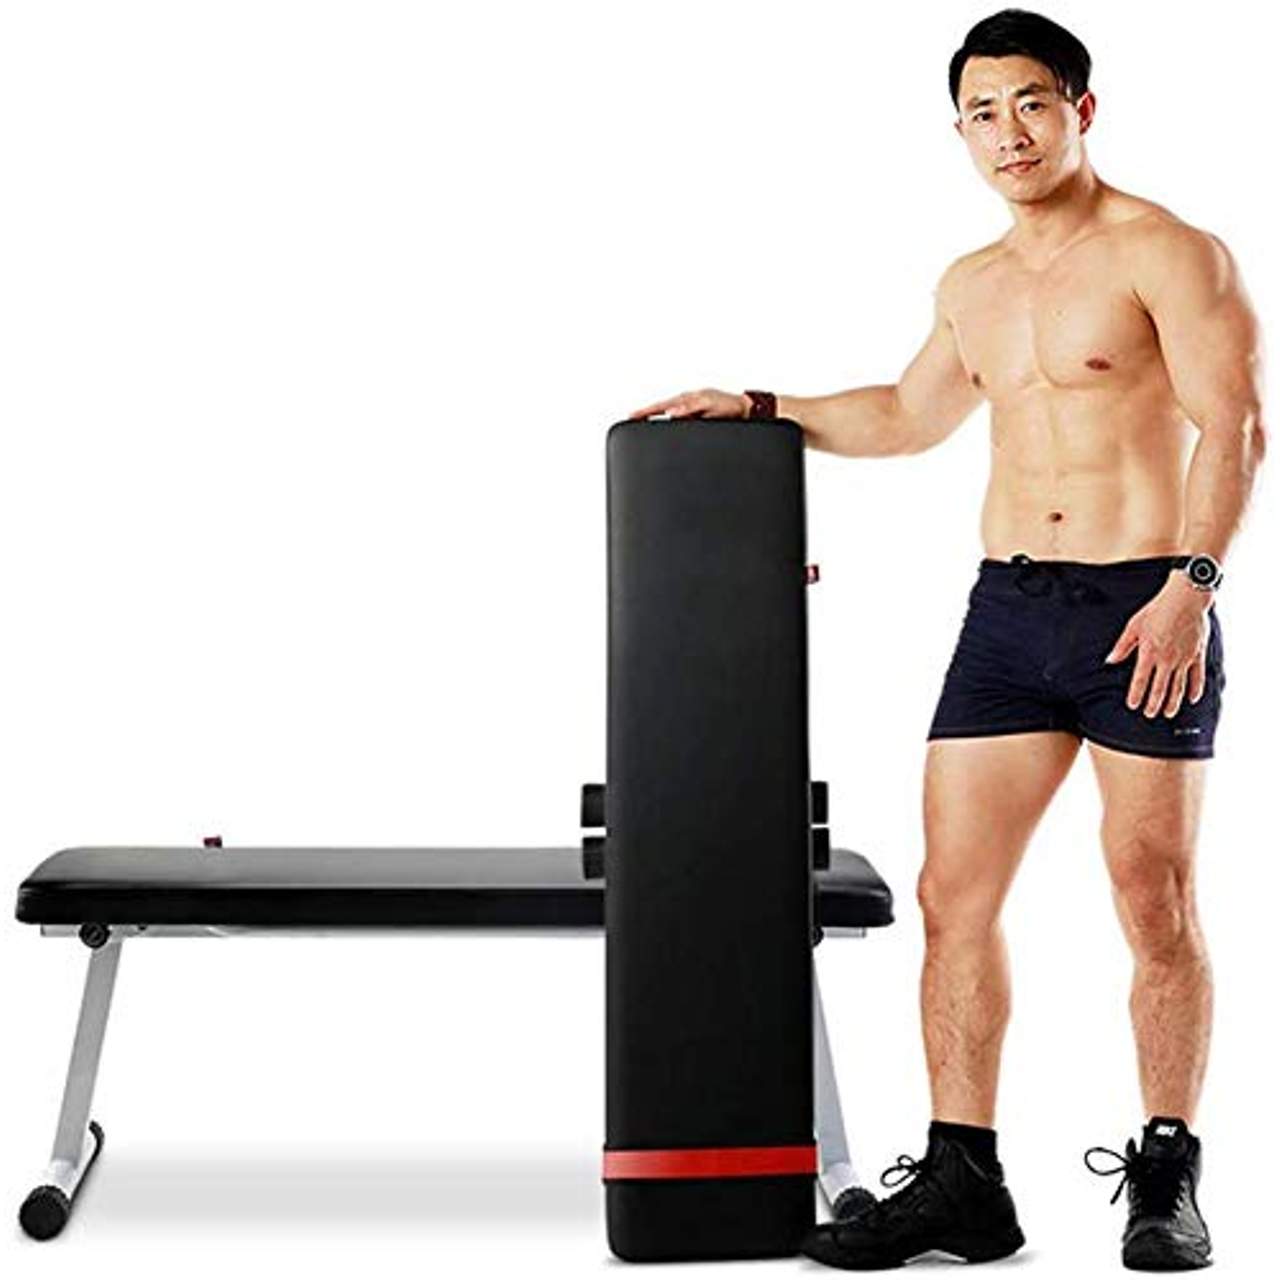 LFJY Supine Bench Startseite Multifunktionale Fitness Equipment